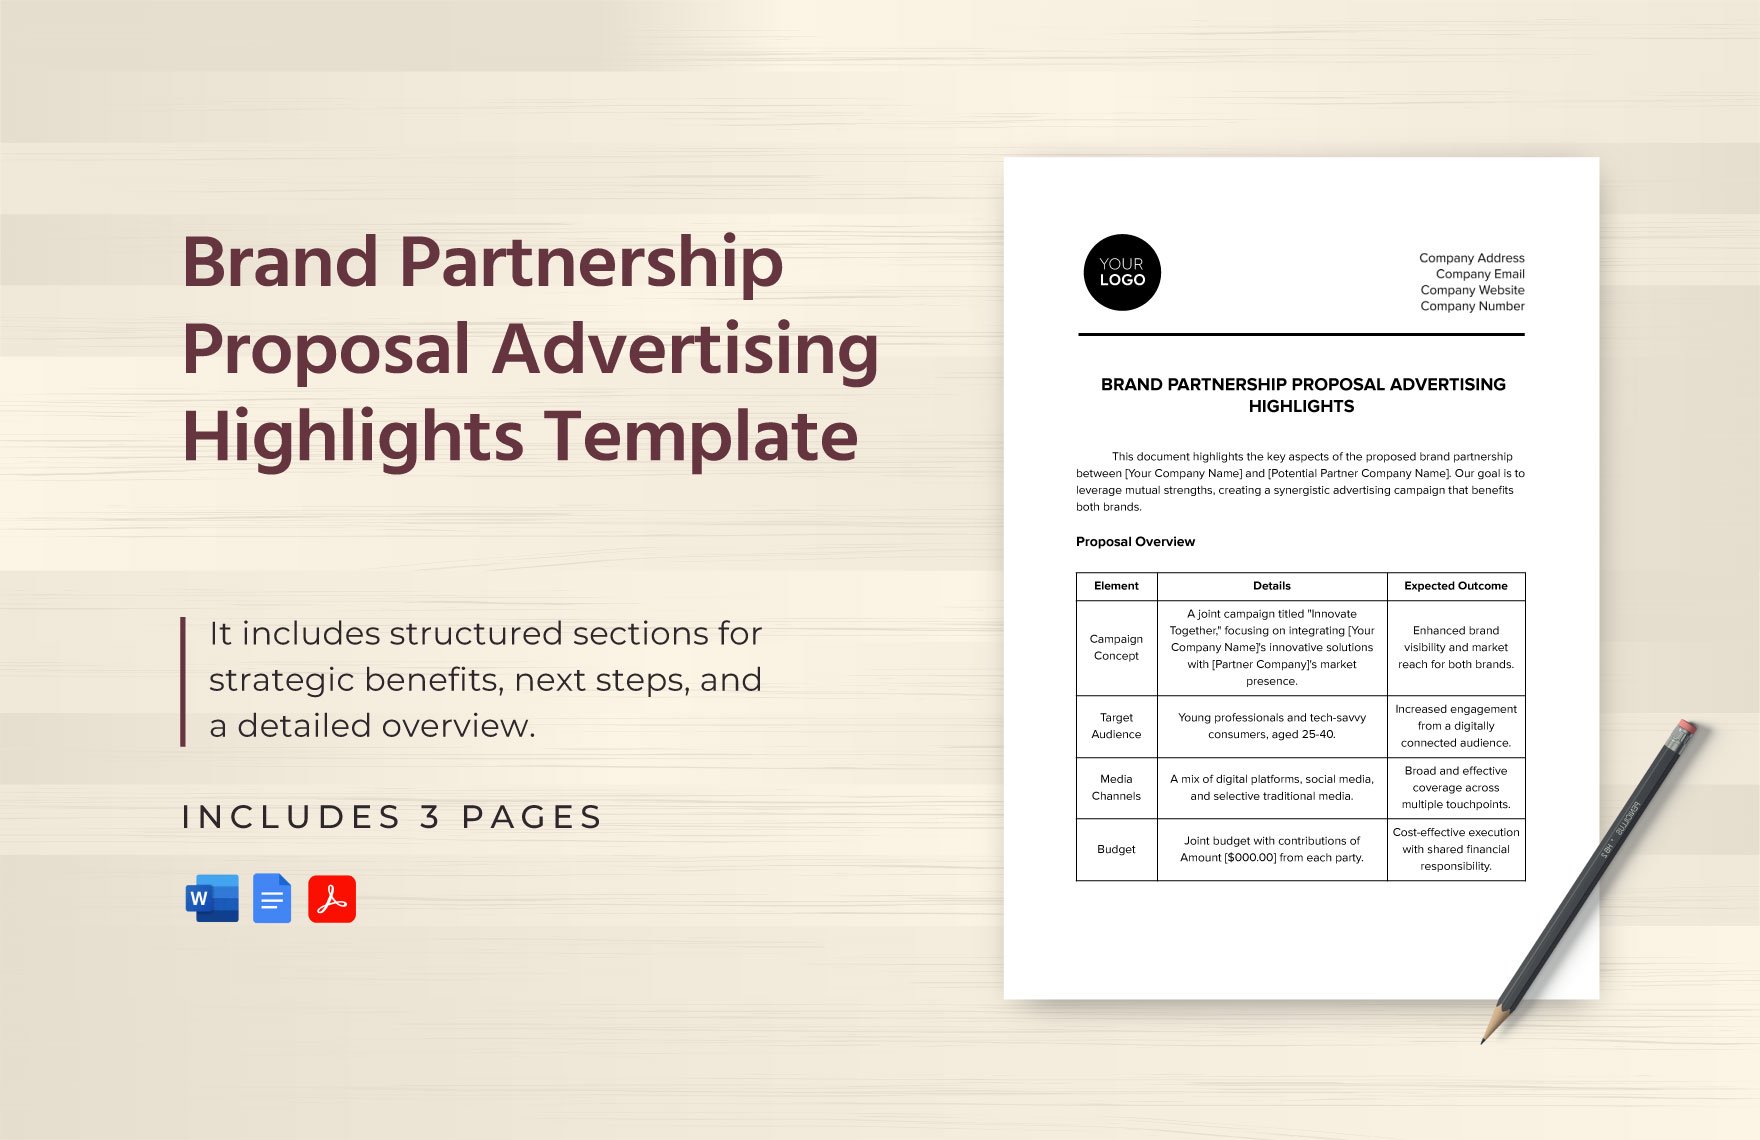 Brand Partnership Proposal Advertising Highlights Template